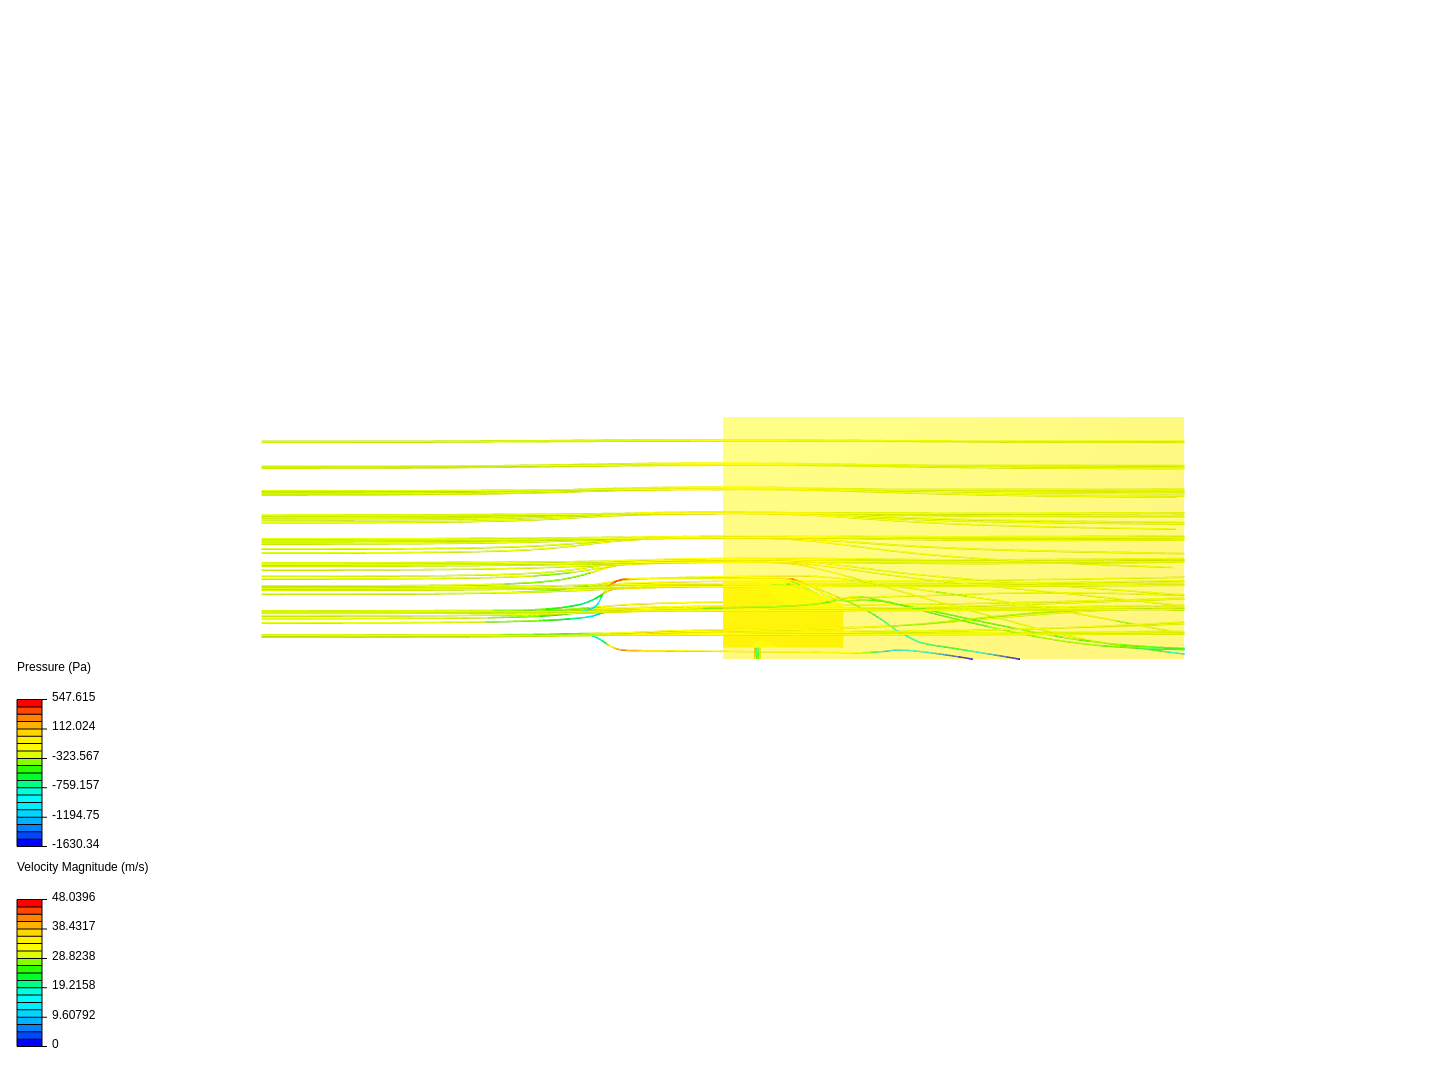 Tutorial Hex-Dominant Parametric mesh image